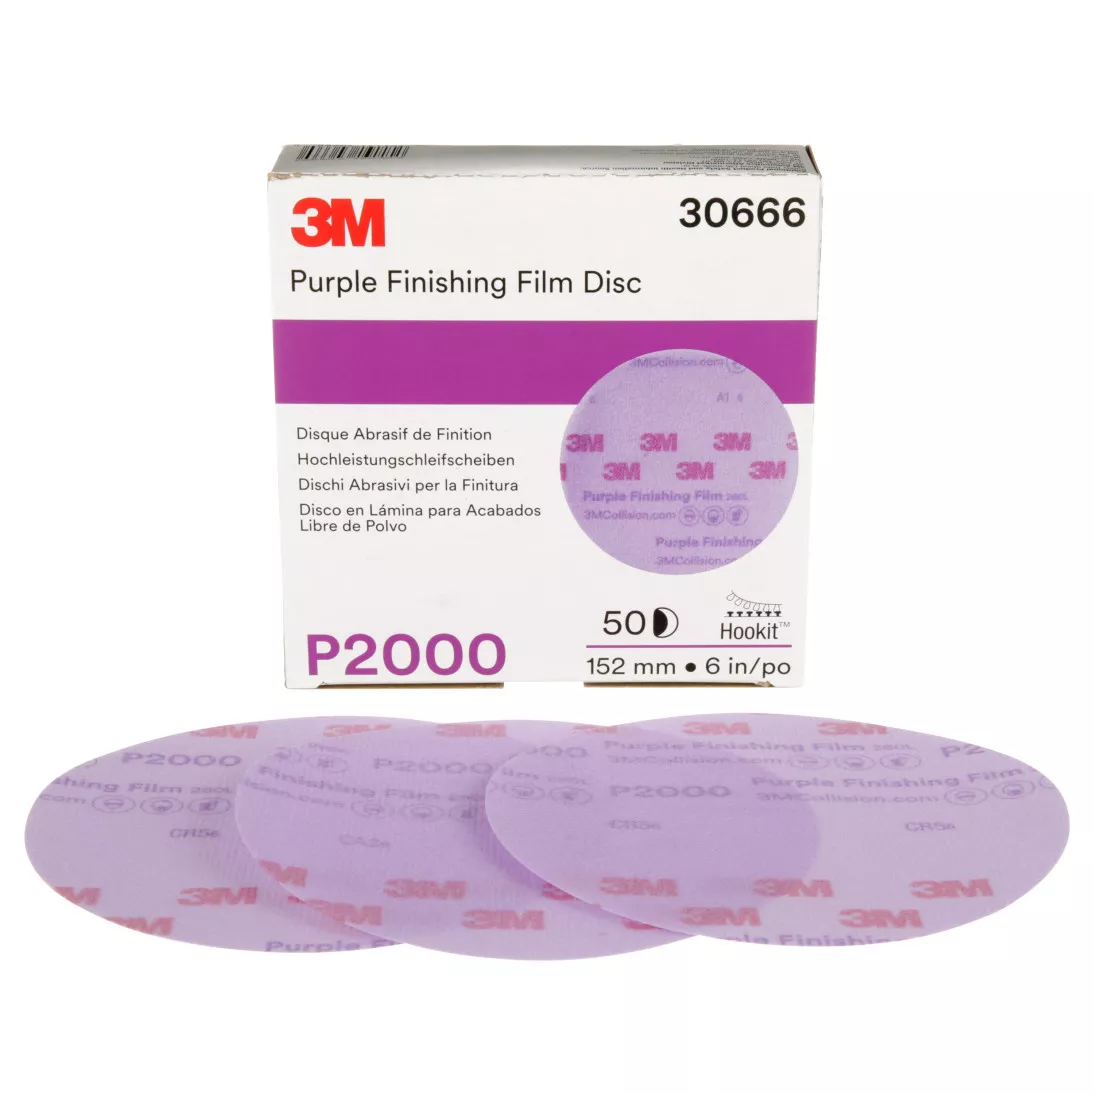 3M™ Hookit™ Purple Finishing Film Abrasive Disc 260L, 30666, 6 in,
P2000, 50 discs per carton, 4 cartons per case